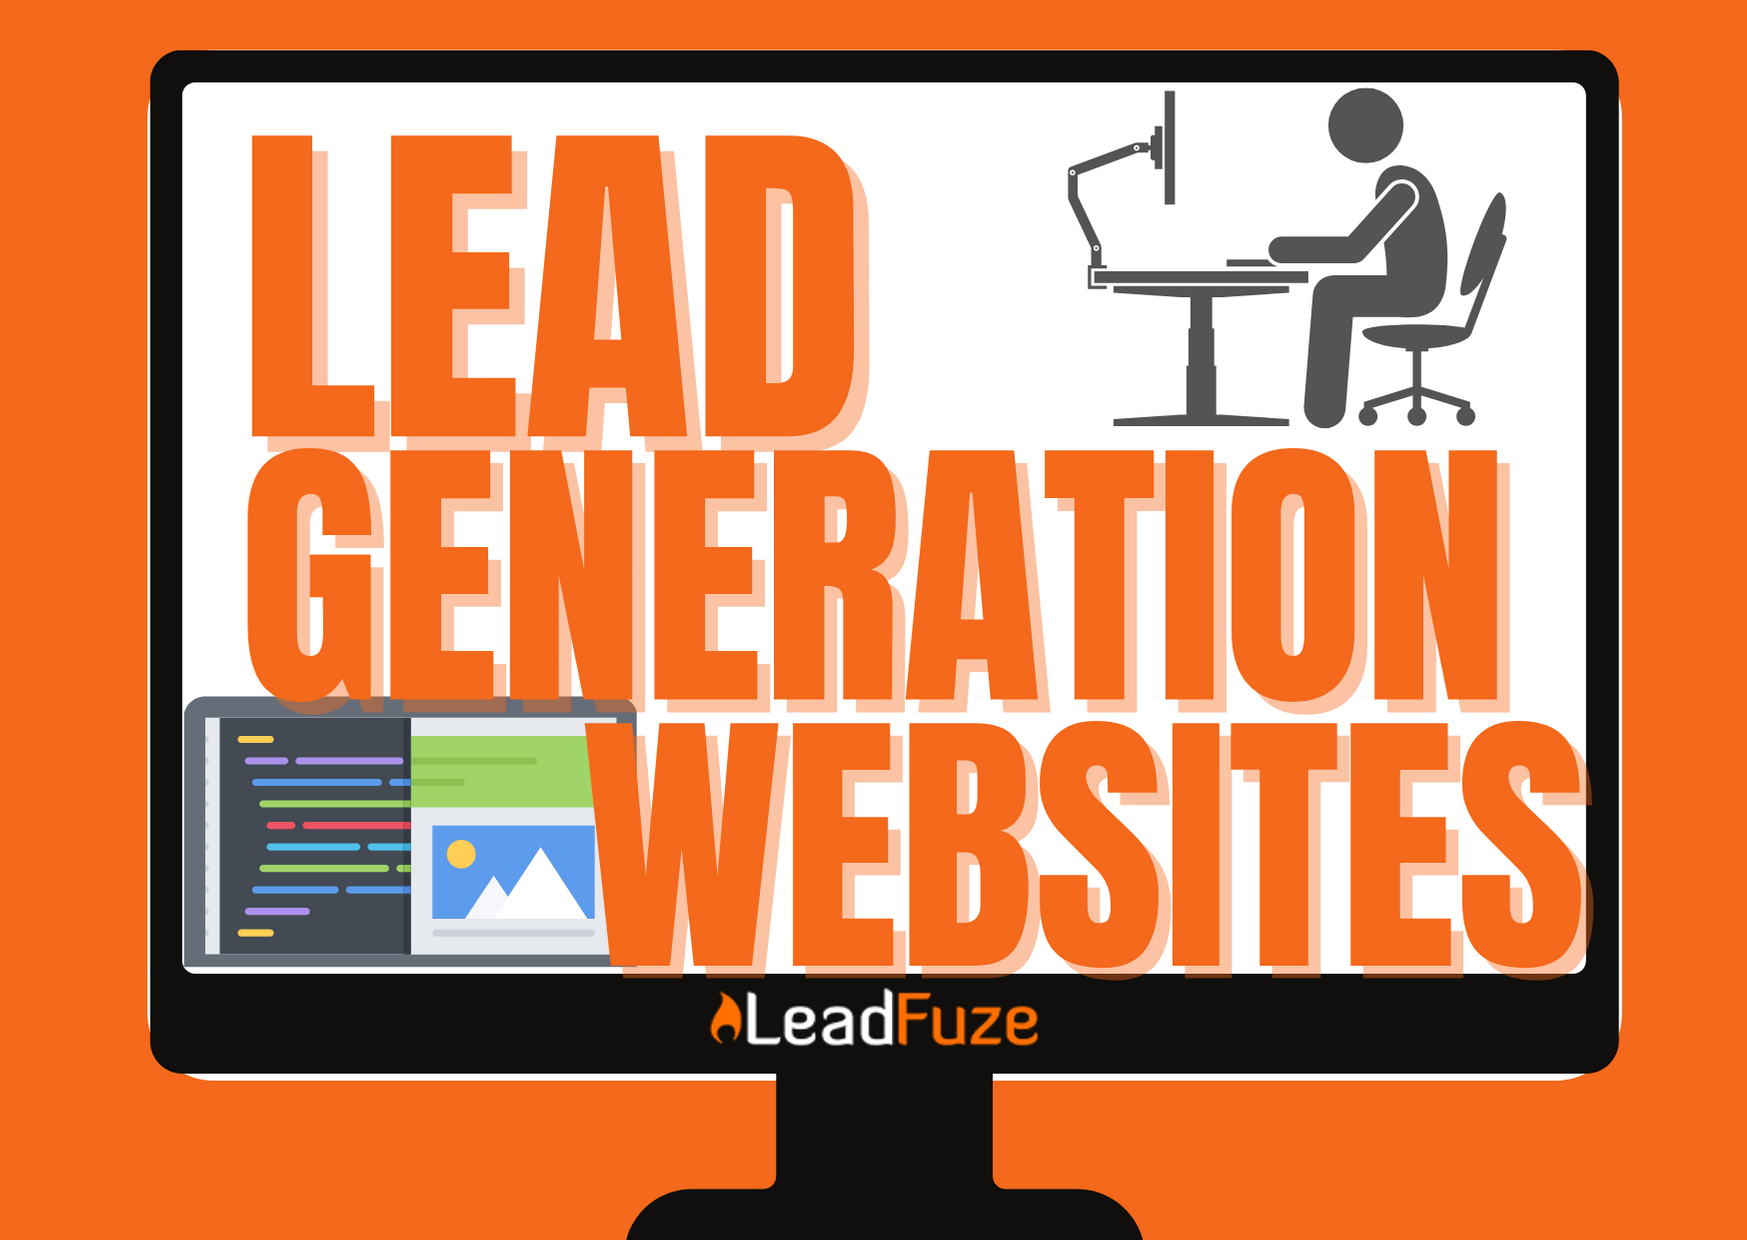 LEAD GENERATION WEBSITES